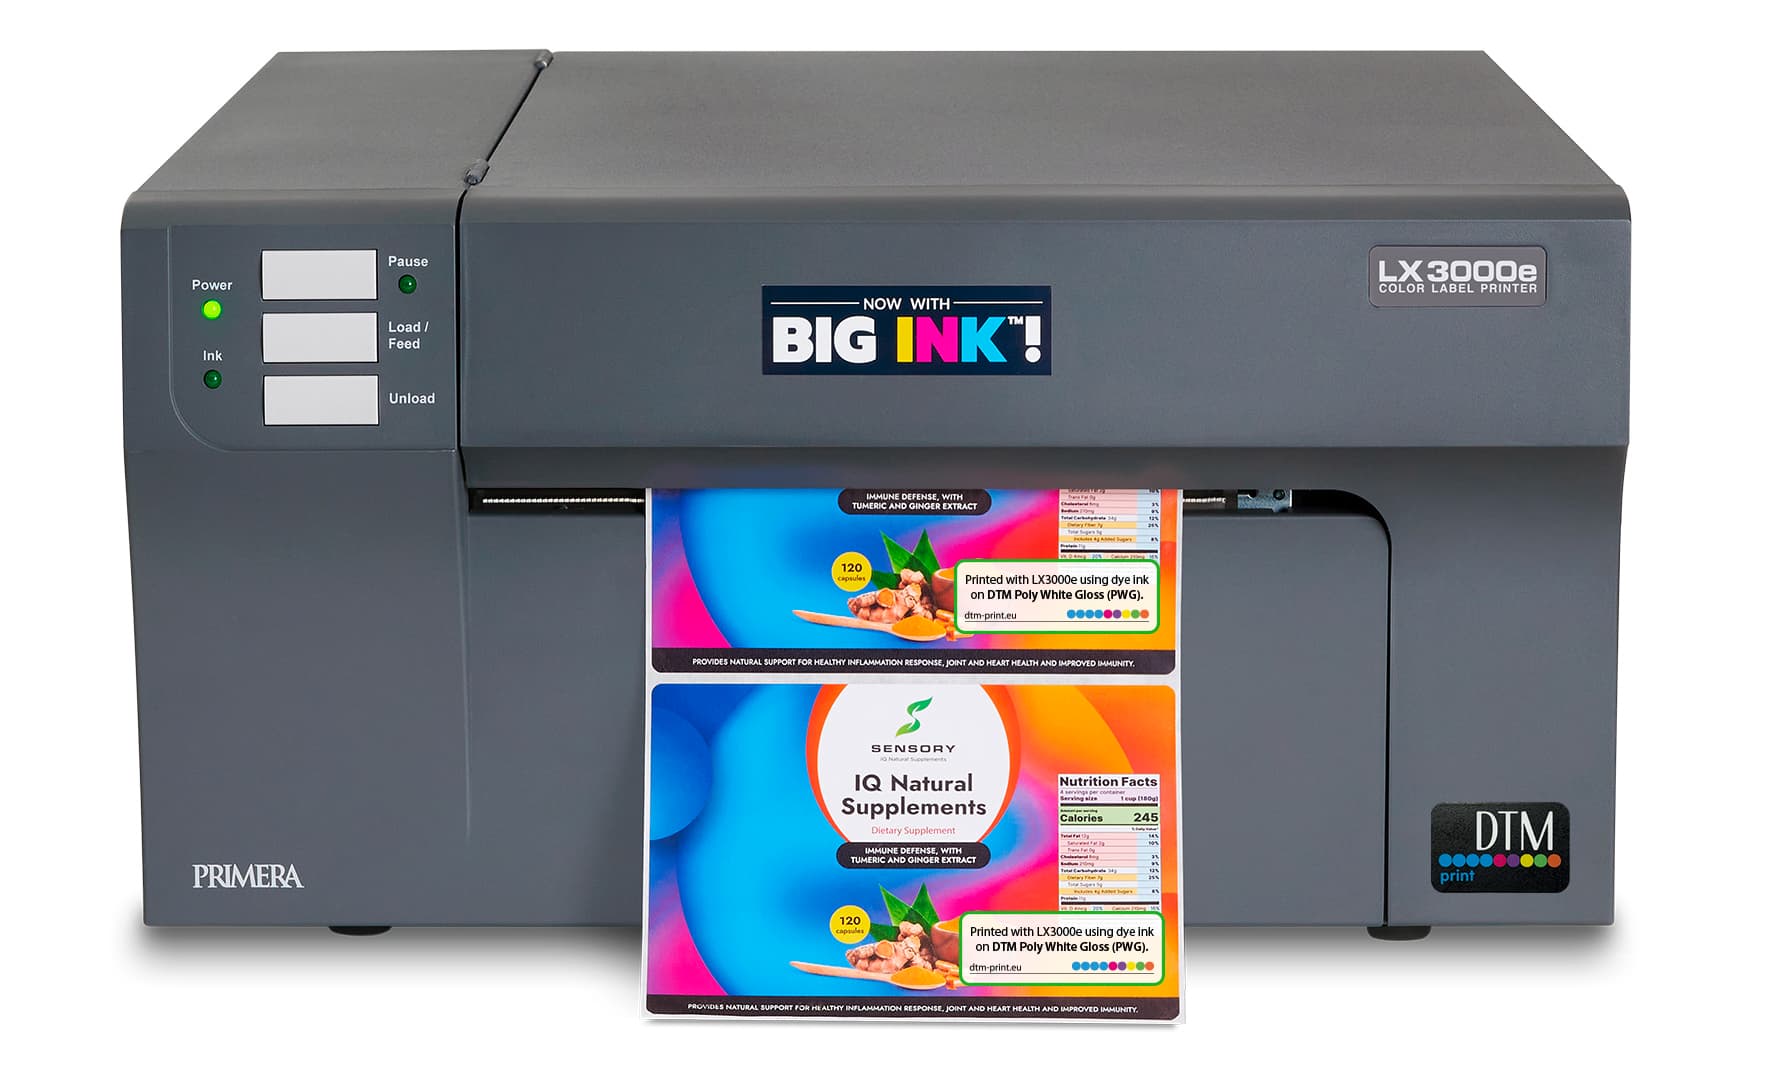 new-lx3000e-color-label-printer-with-big-ink-me-printer